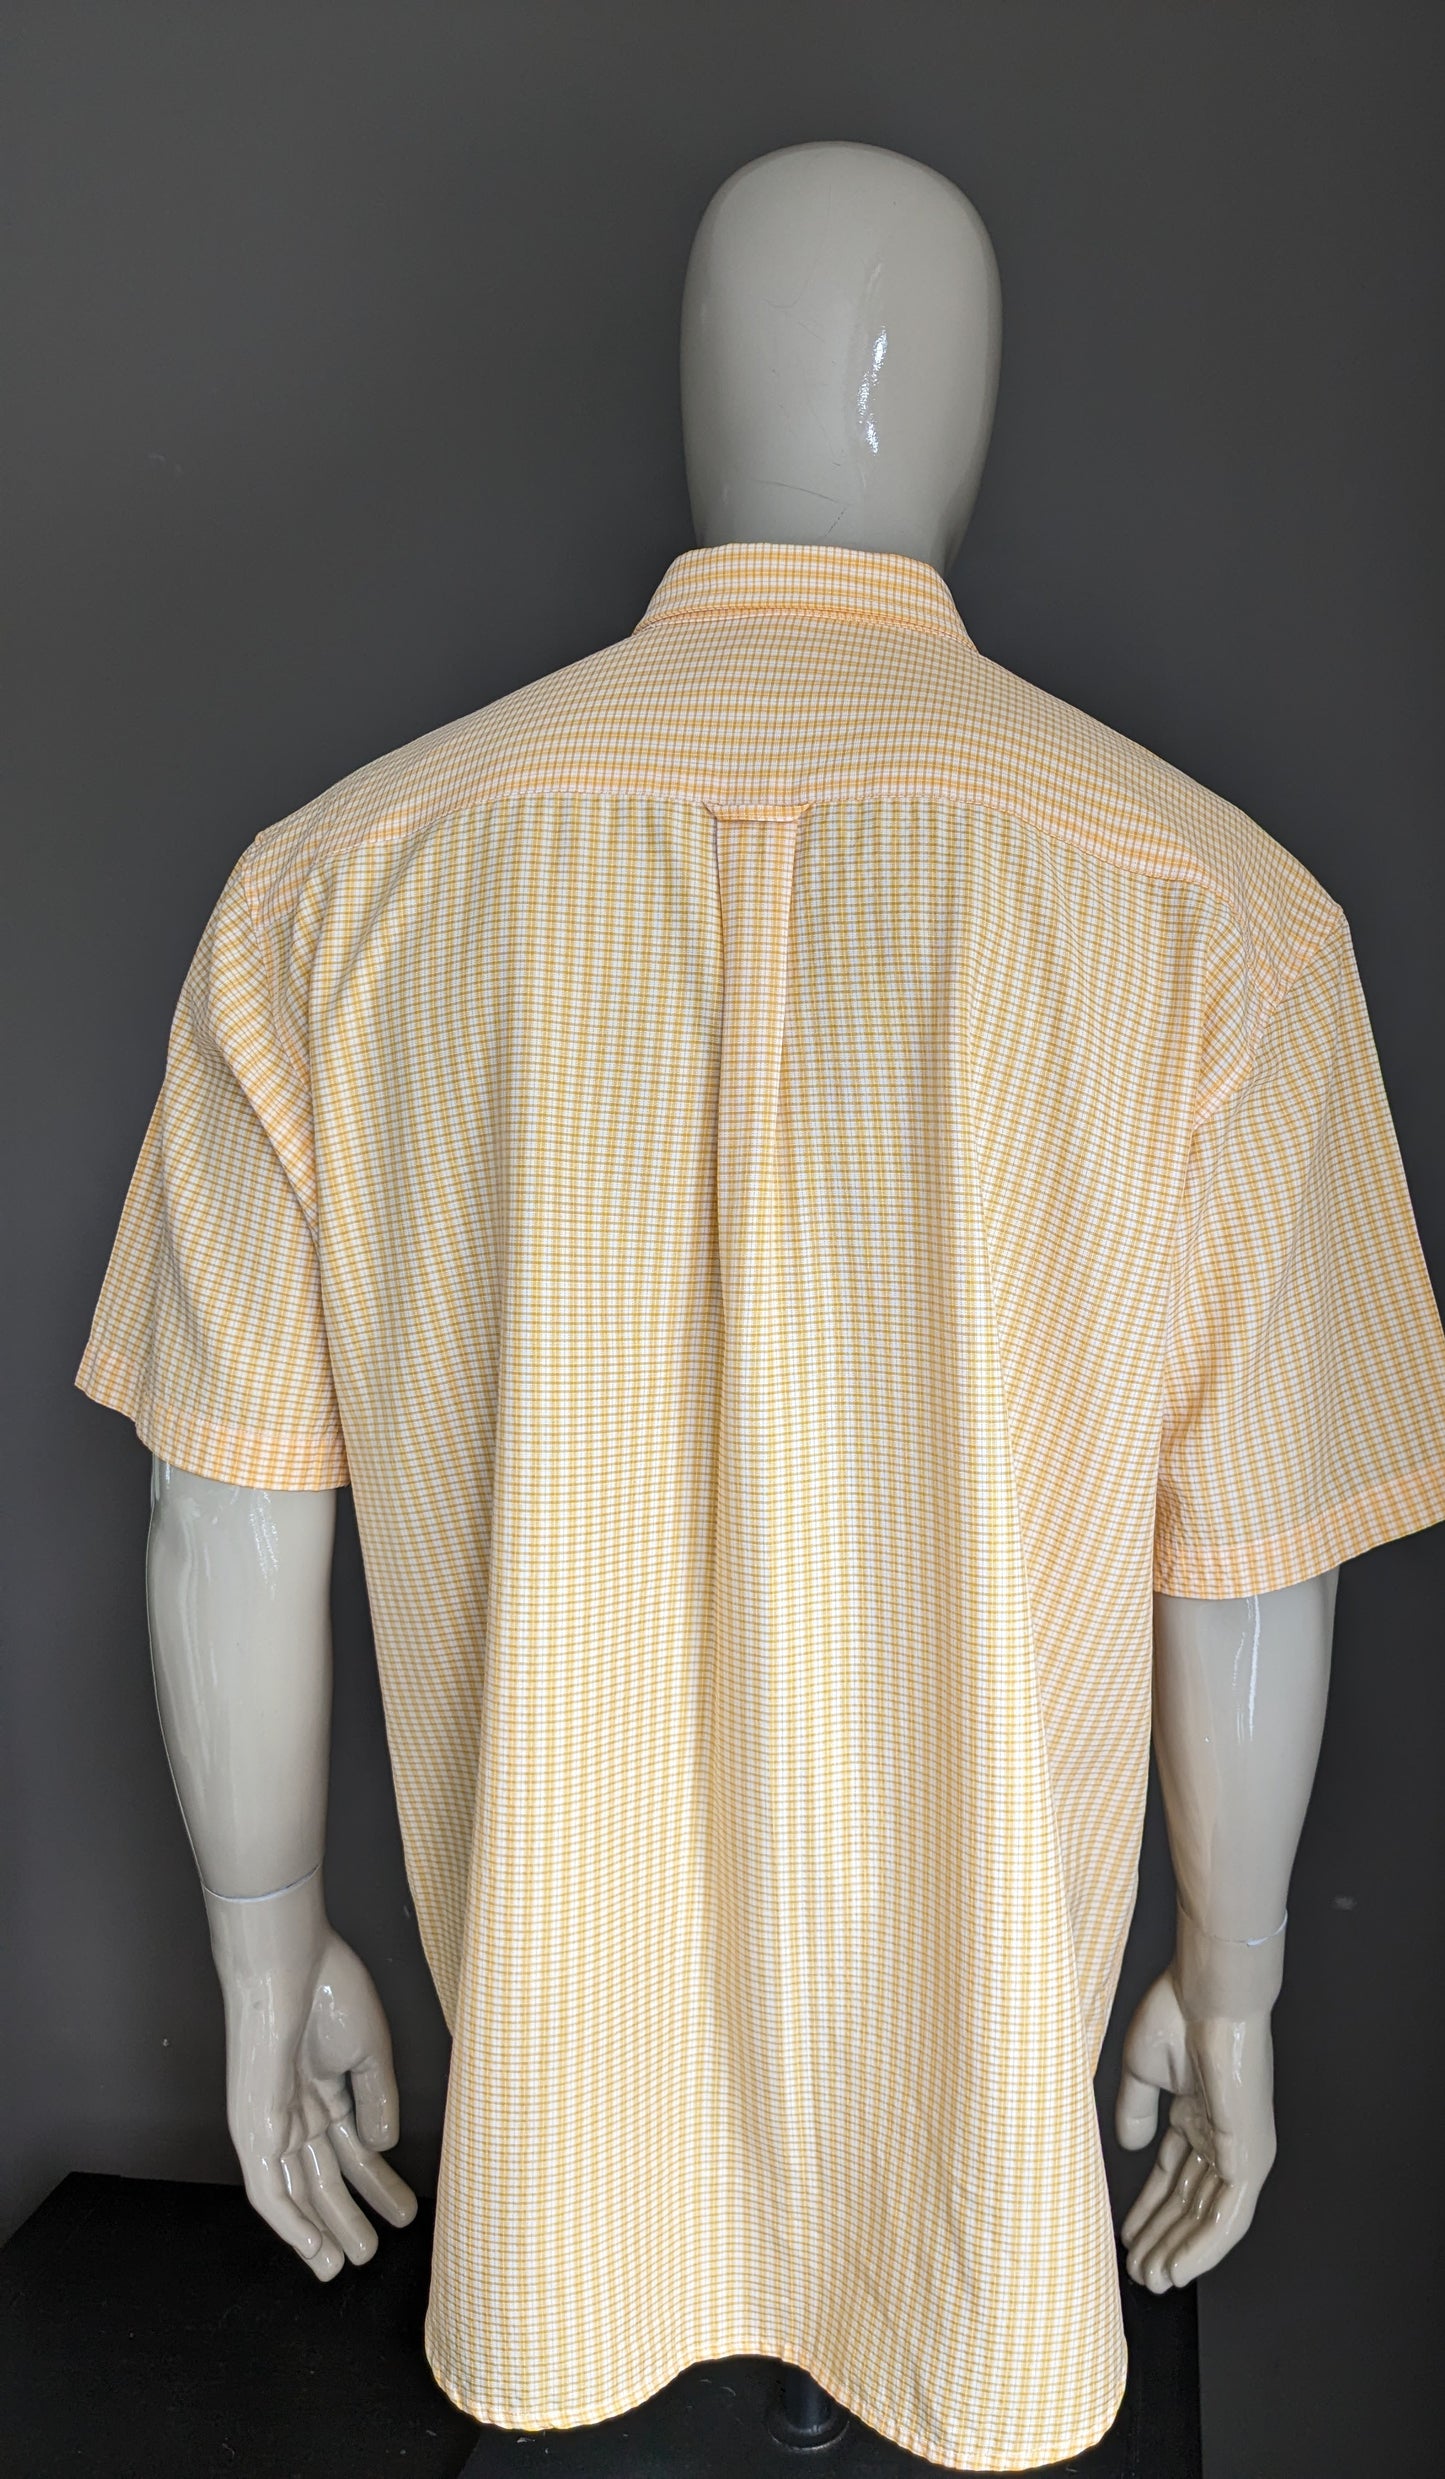 Camisa de club casual vintage manga corta. Motivo de color beige naranja. Tamaño XL / XXL-2XL.